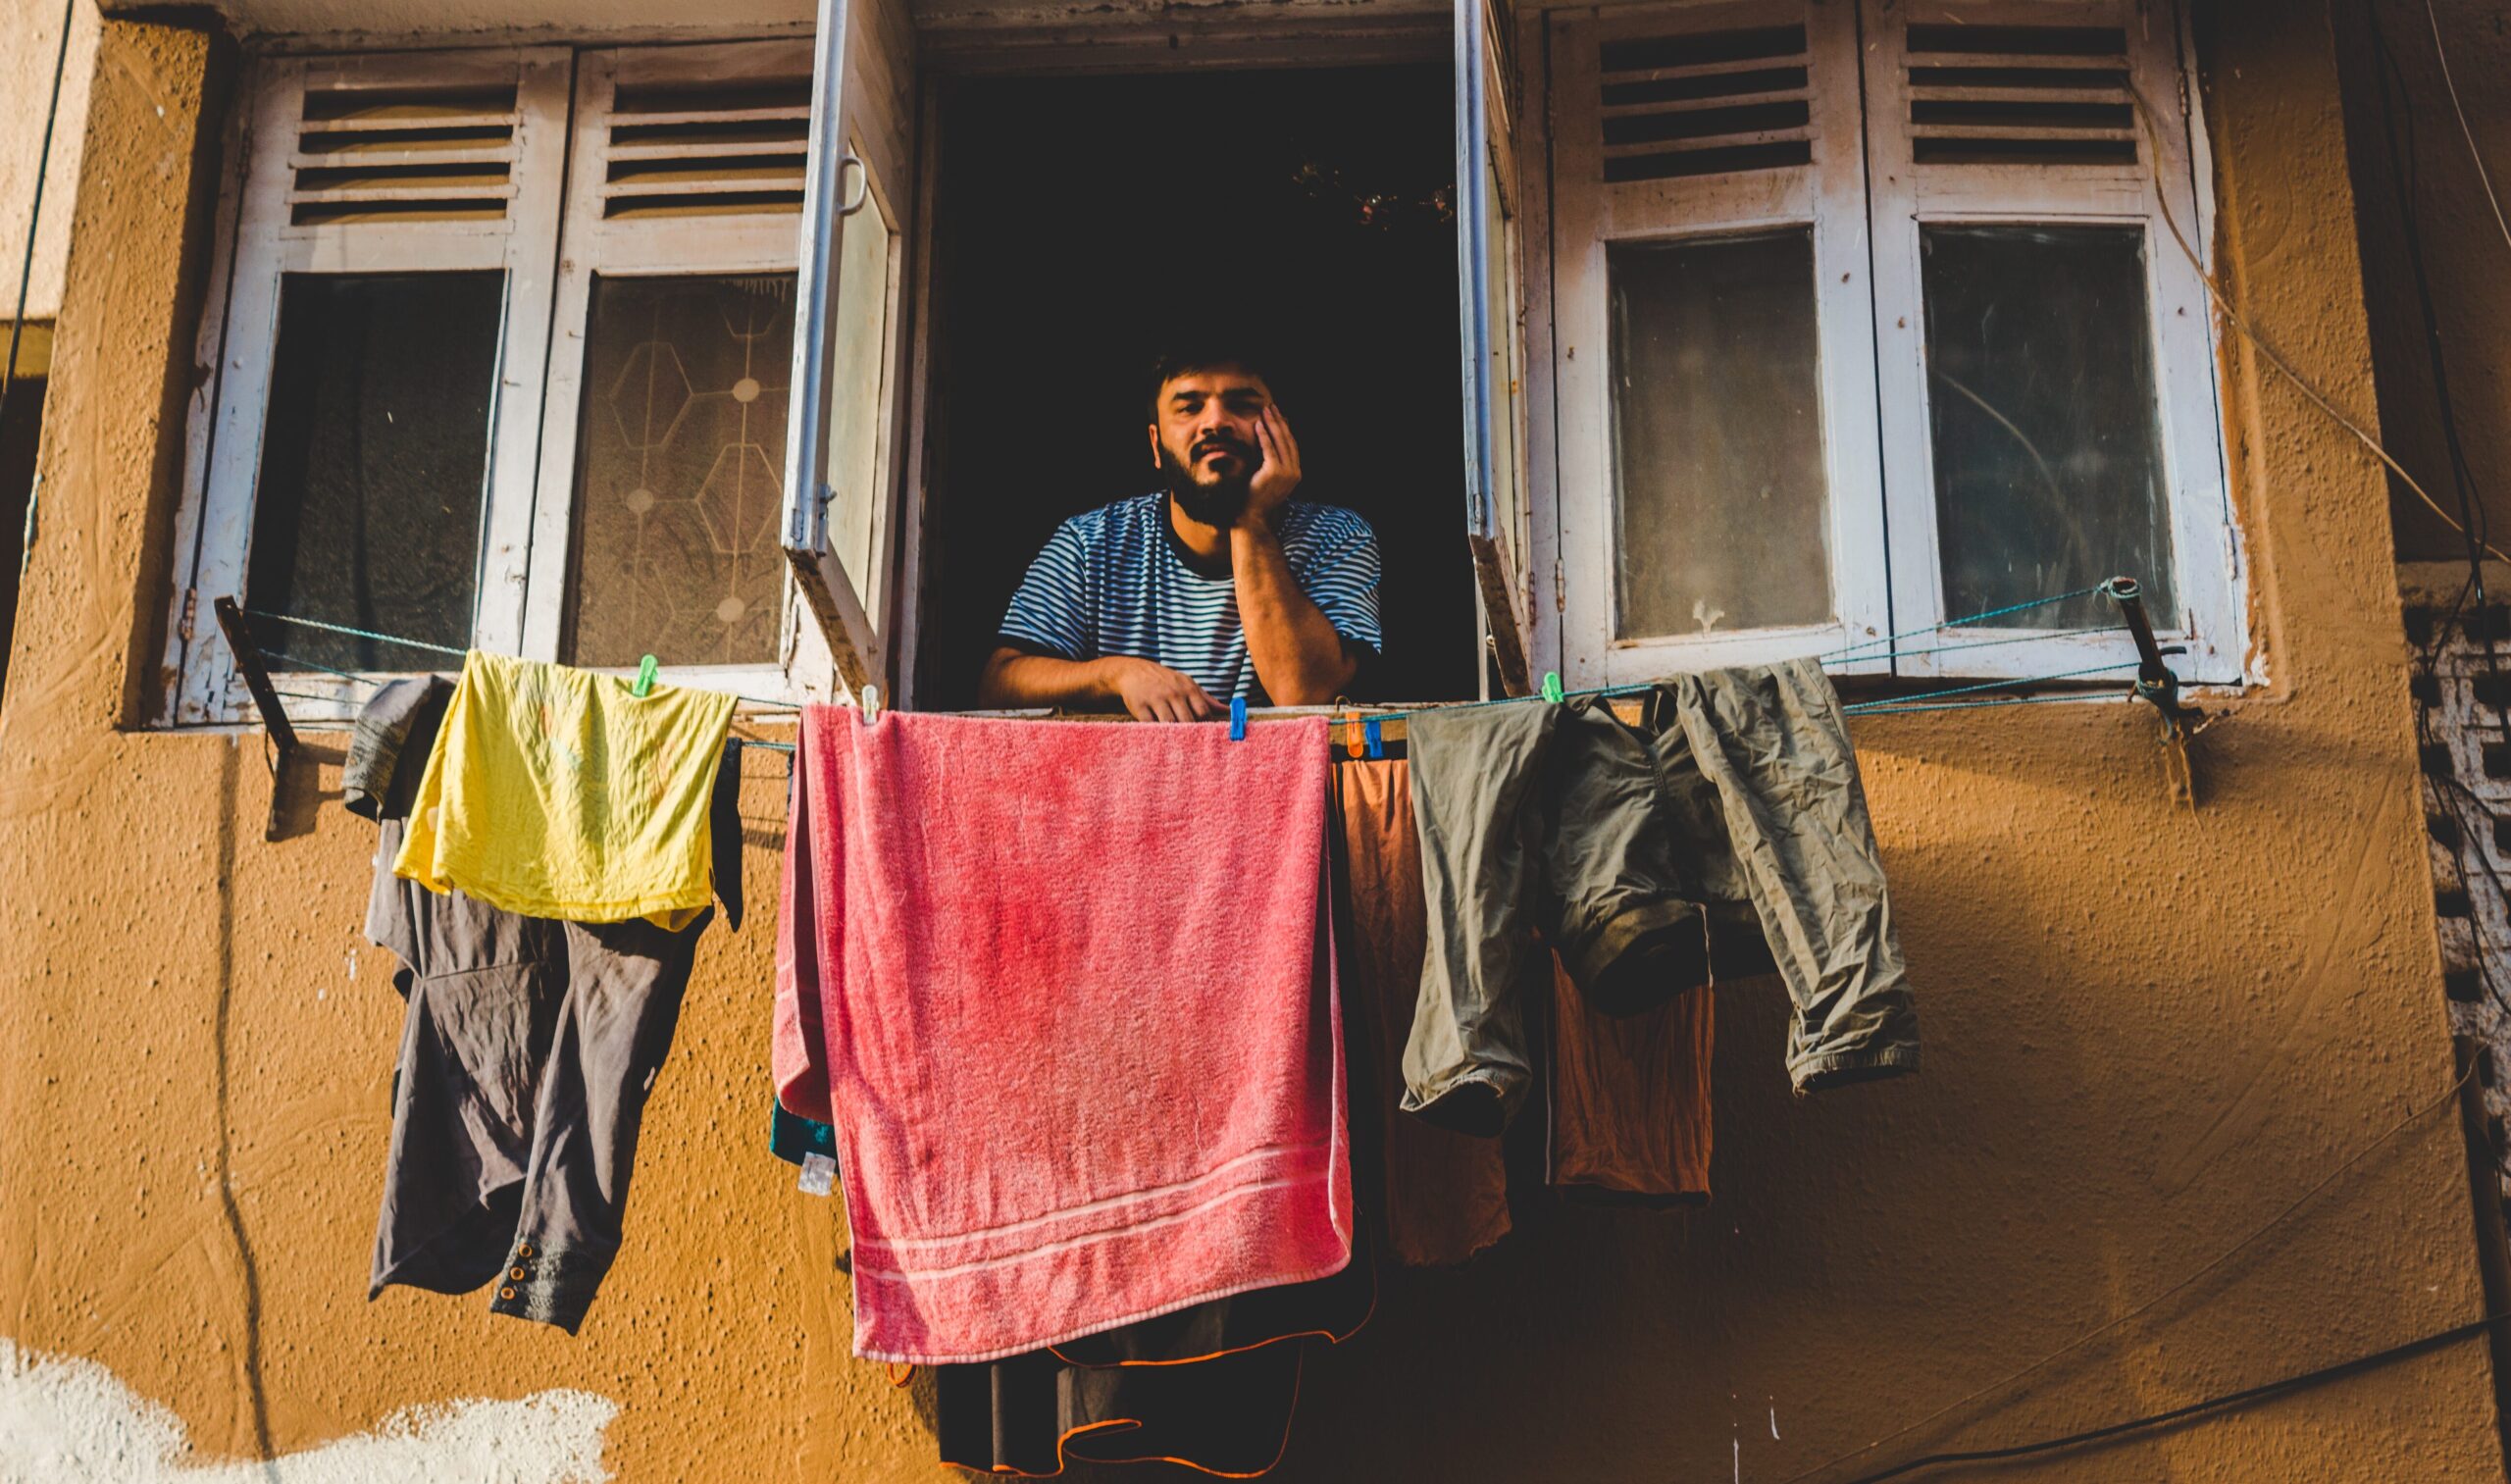 Laundry Drying Outside Window